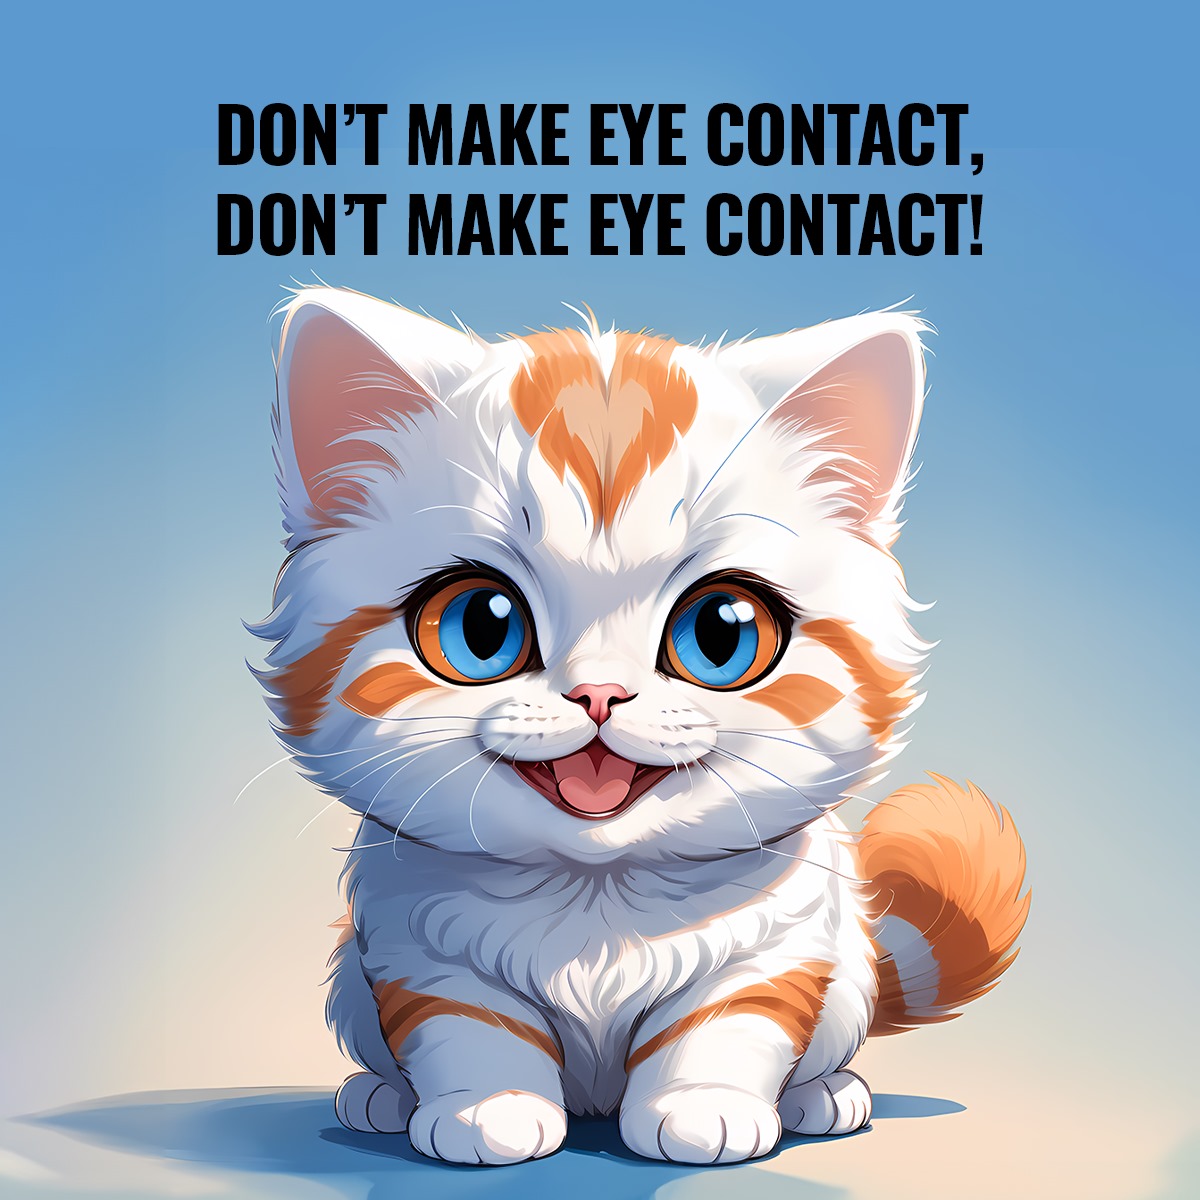 Don't make eye contact.